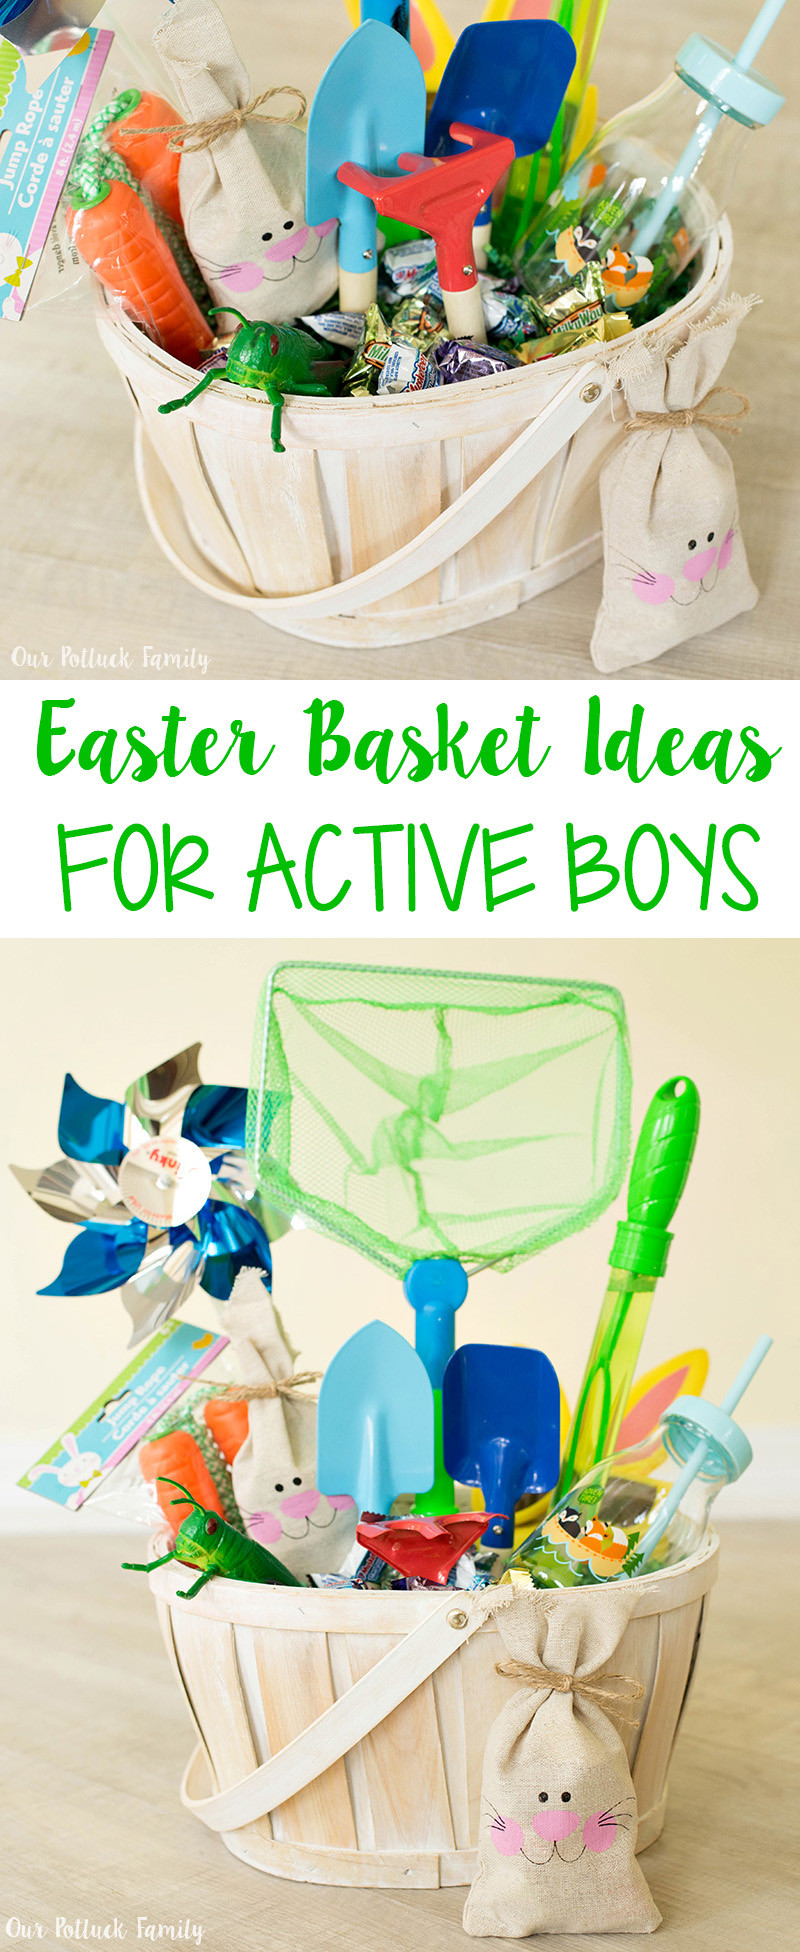 Boys Easter Basket Ideas
 Easter Basket for Active Boys Our Potluck Family